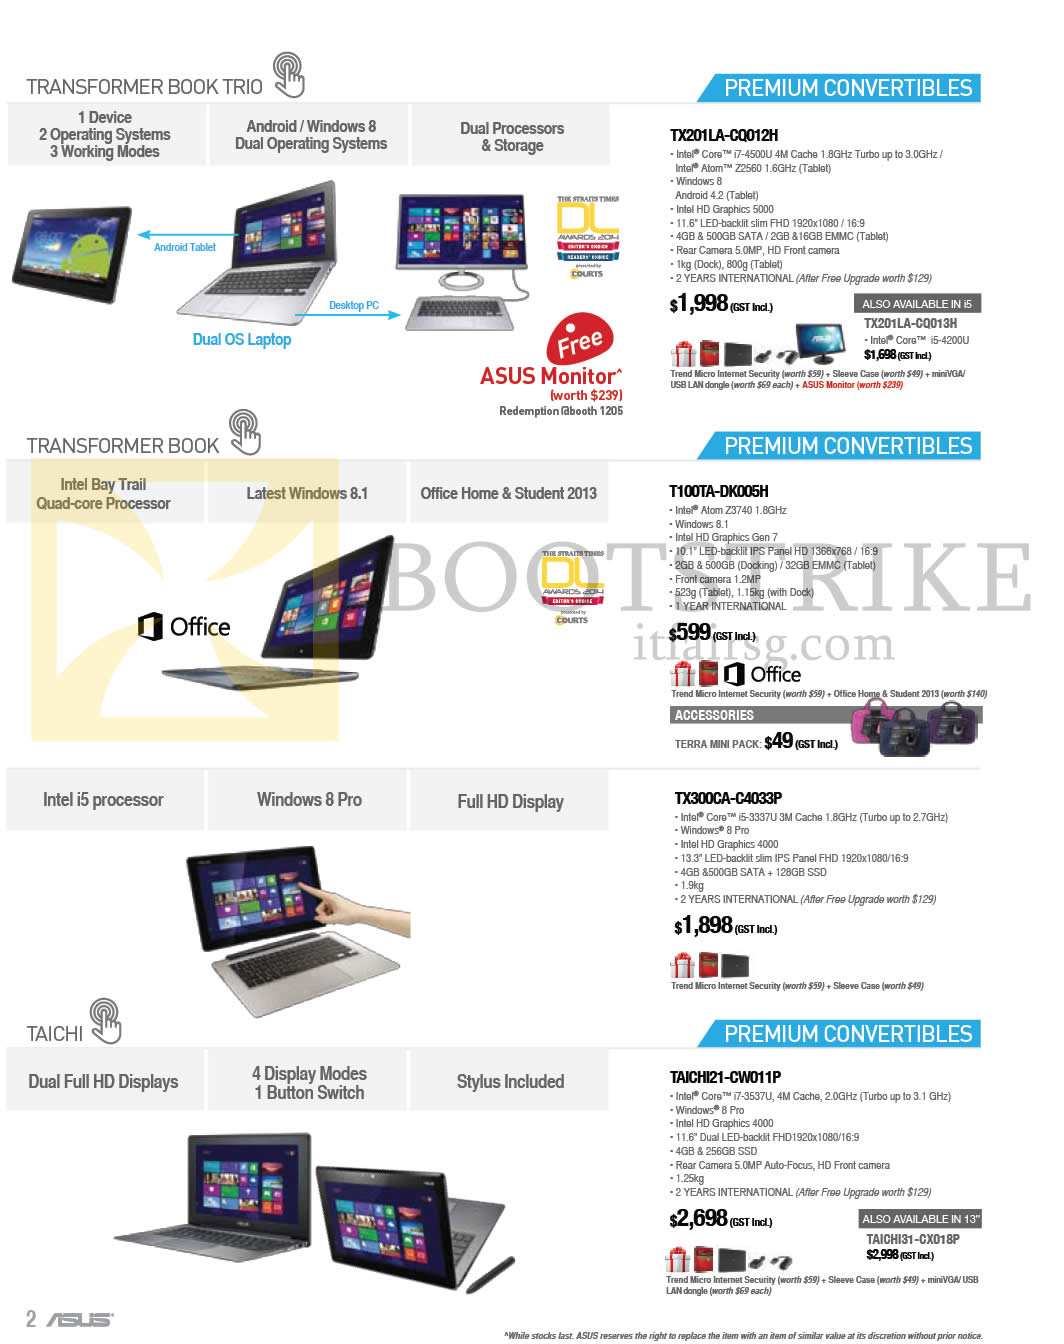 IT SHOW 2014 price list image brochure of ASUS Notebooks Transformer Book TX201LA-CQ012H, T100TA-DK005H, TX300CA-C4033P, TAICHI-CW011P